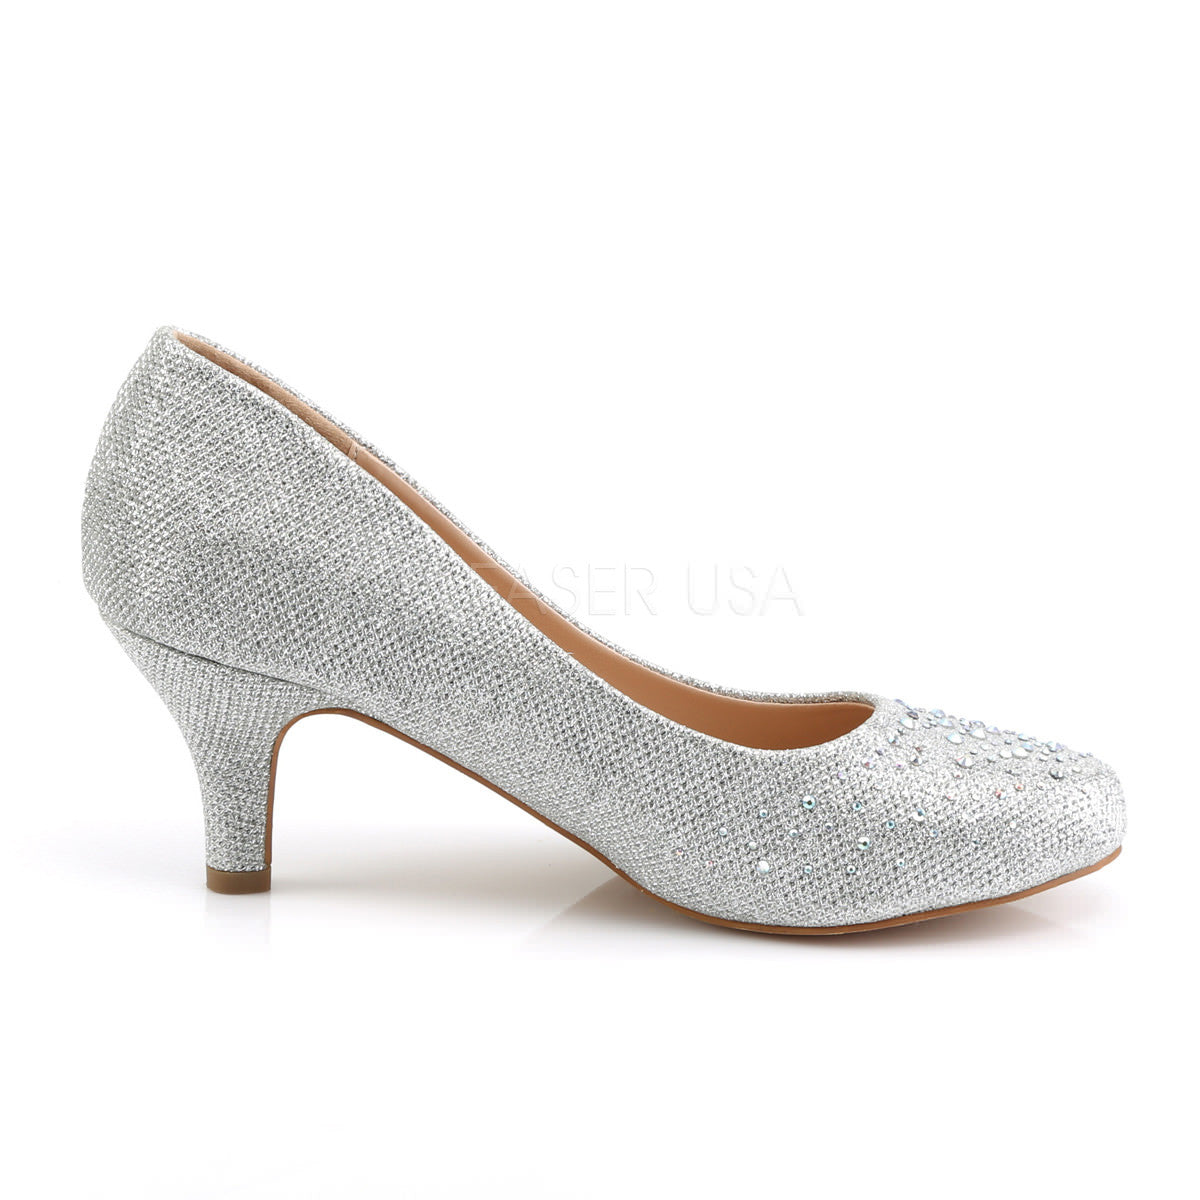 Fabulicious DORIS-06 Silver Glitter Mesh Fabric Pumps – Shoecup.com